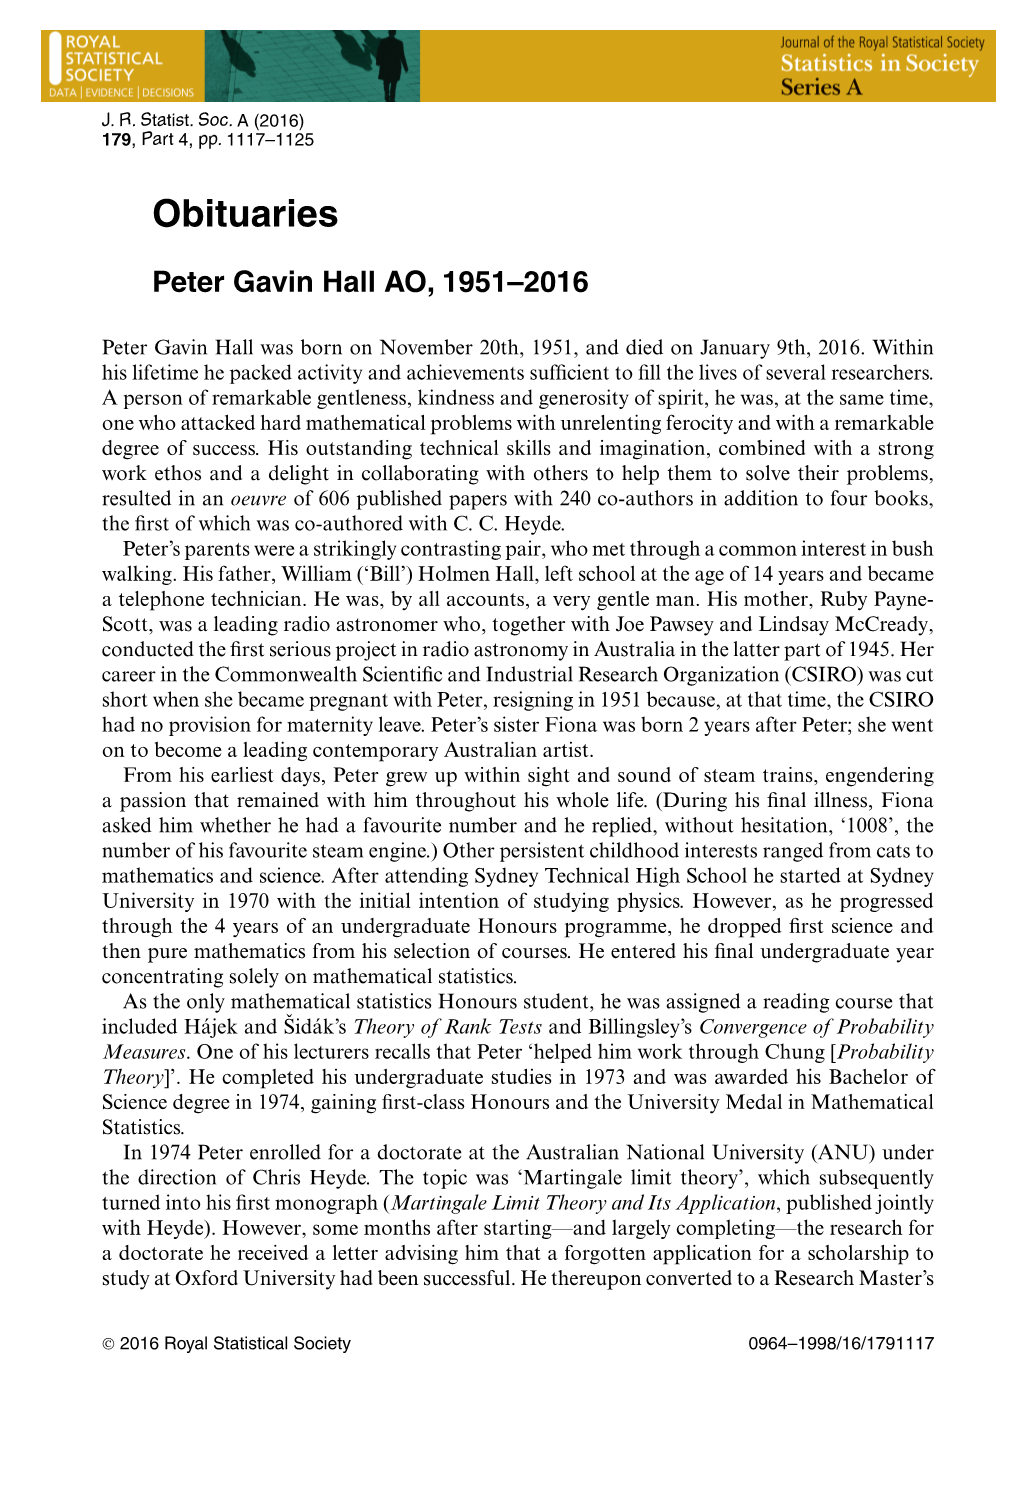 Royal Statistical Society, Obituary for Peter Gavin